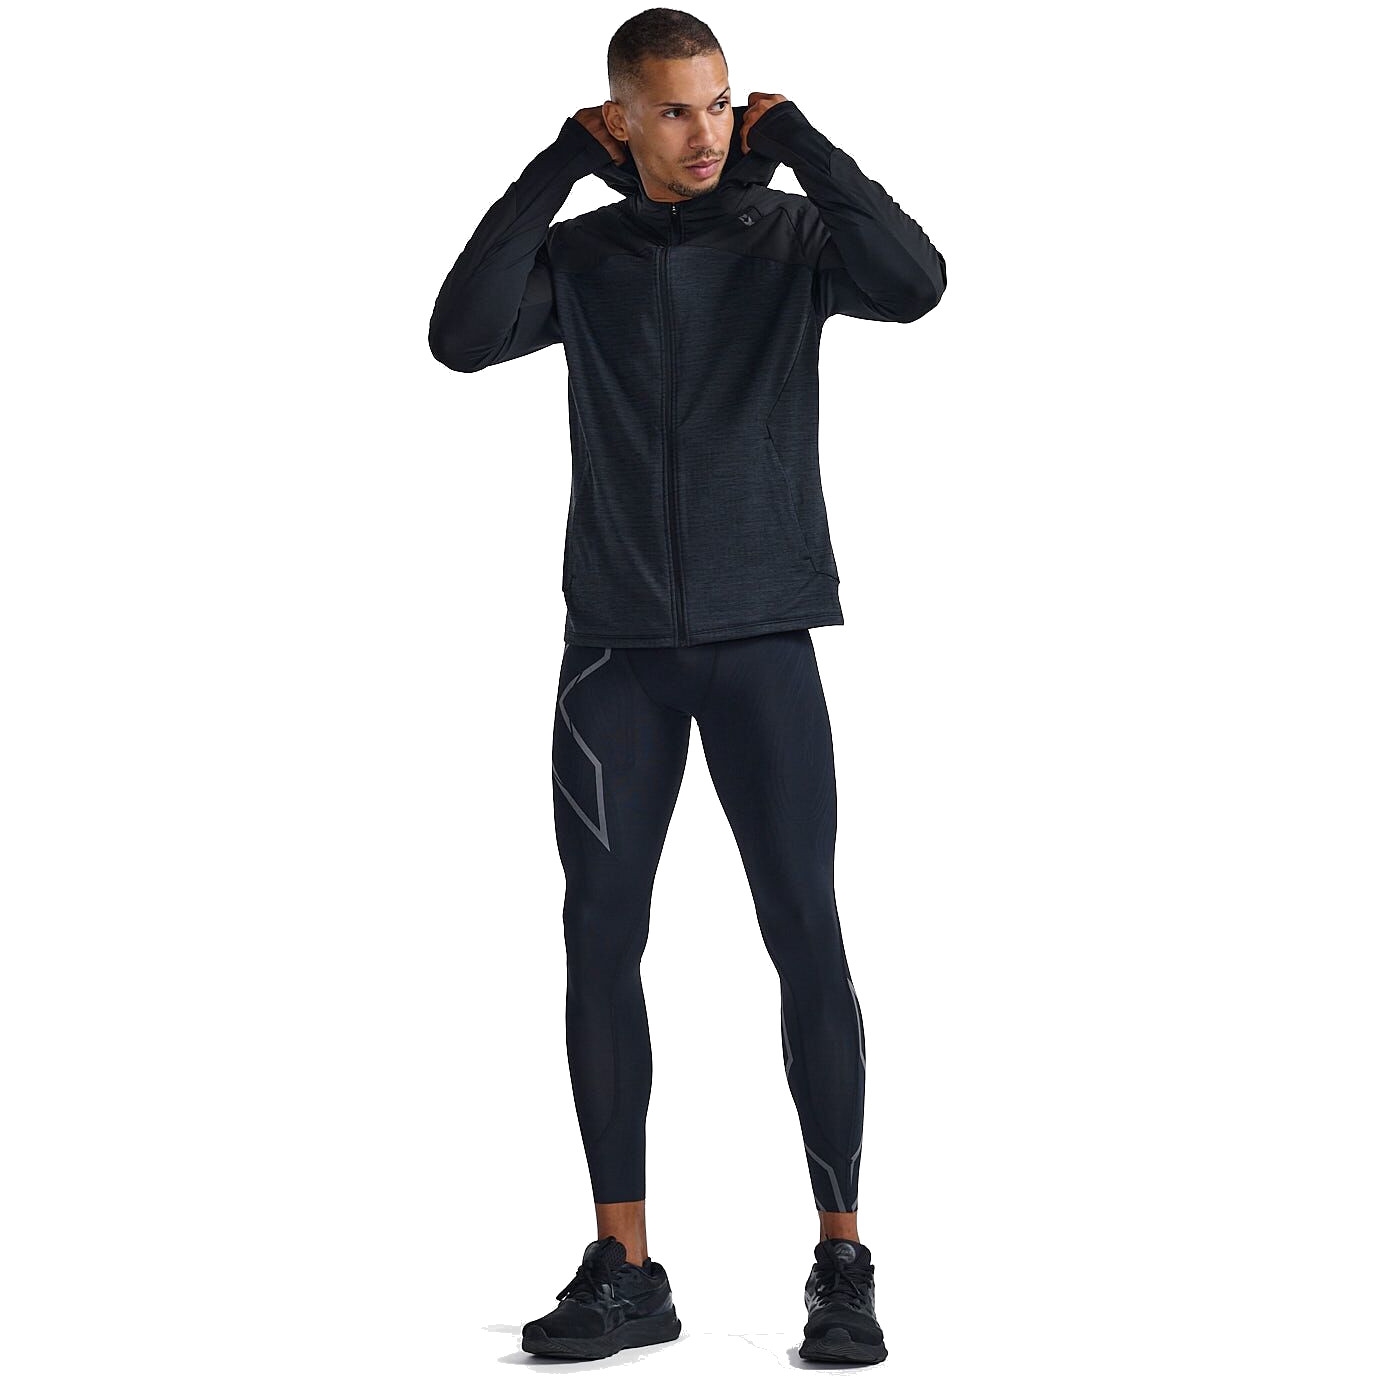 2XU Men's Ignition Shield Compression Tights Pants, Black/Black